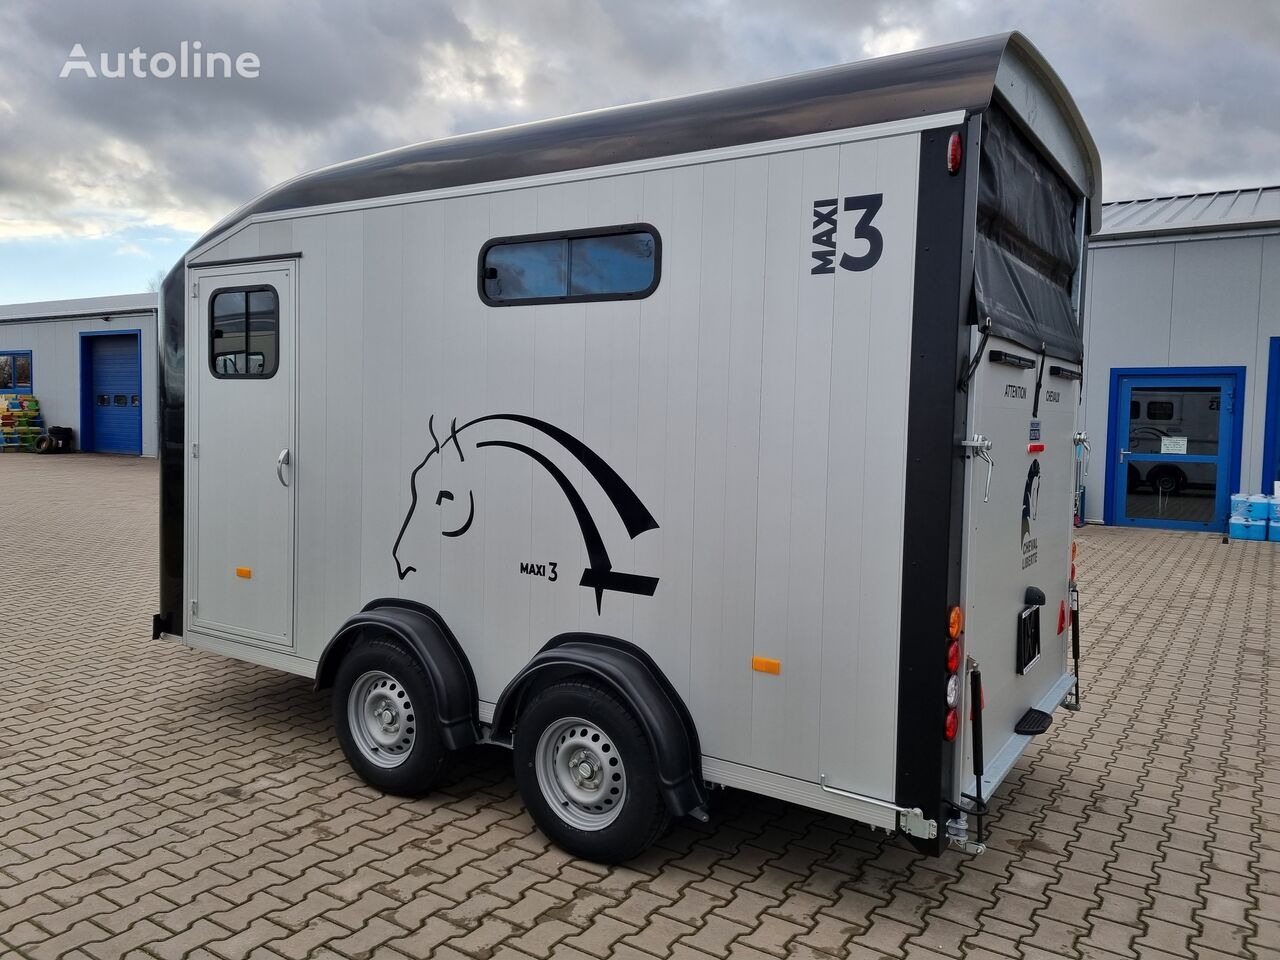 Remolque para caballos nuevo Cheval Liberté Maxi 3 Minimax trailer for 3 horses GVW 3500kg tack room saddle: foto 12